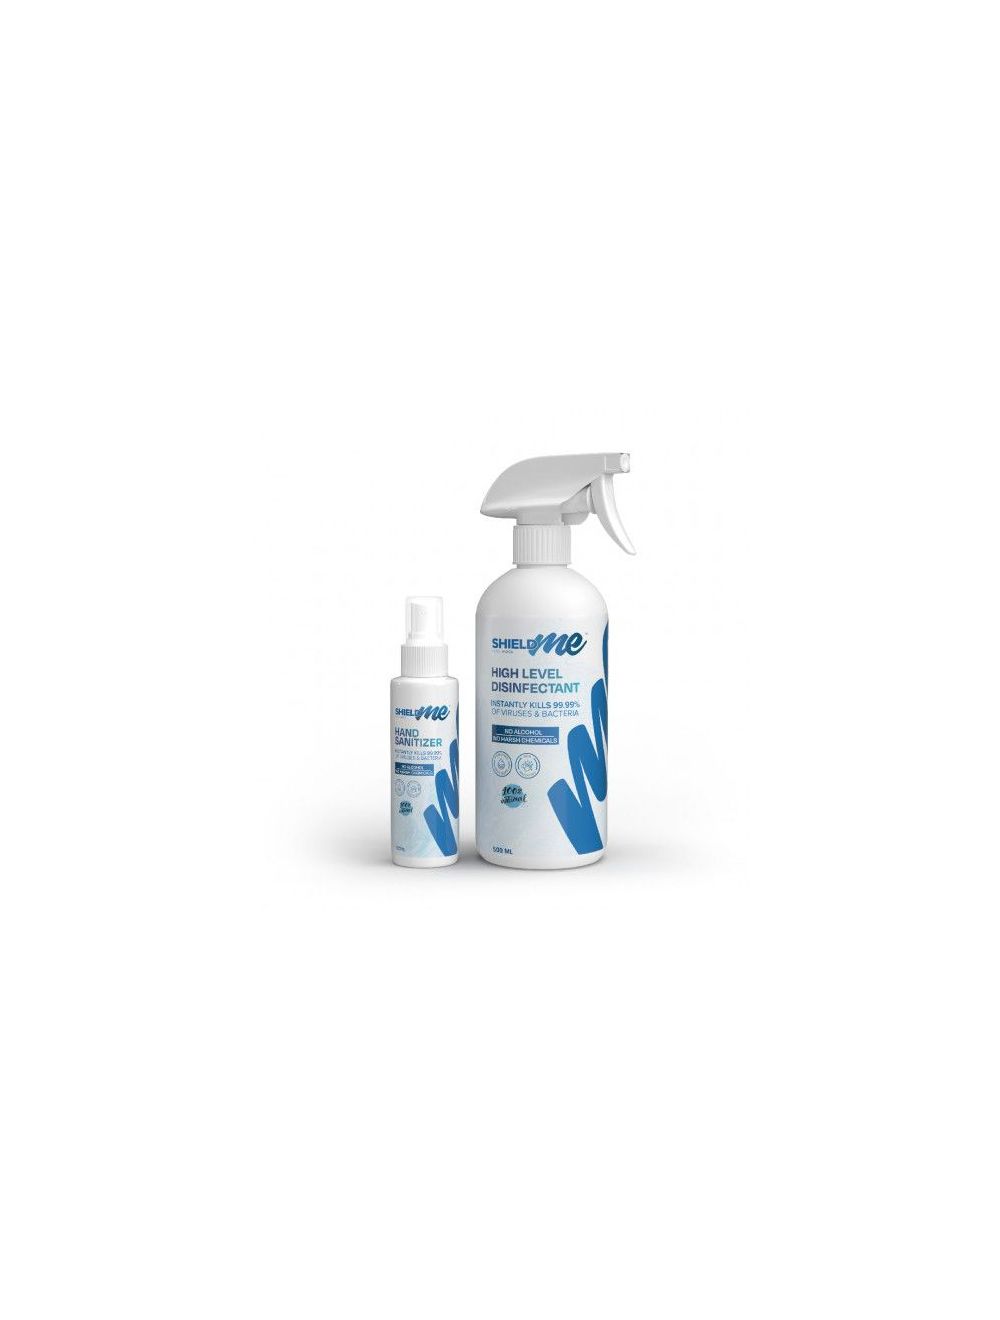 SHIELDme GYM Package of High Level Disinfectant & Sanitizer [500ML+100ML]-MX-VMPK-4G45